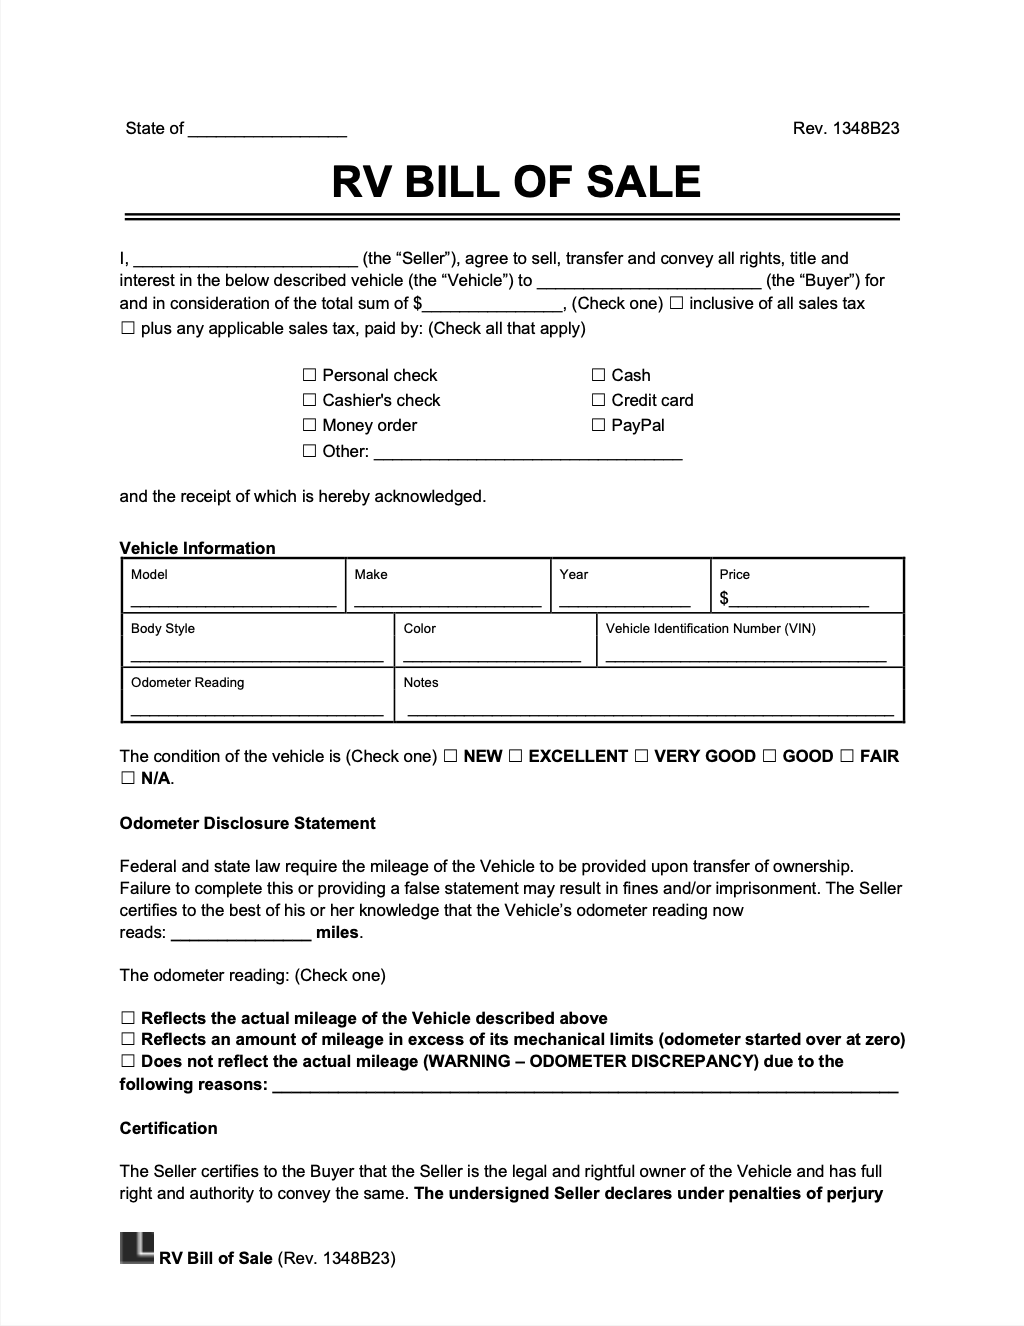 rv bill of sale form